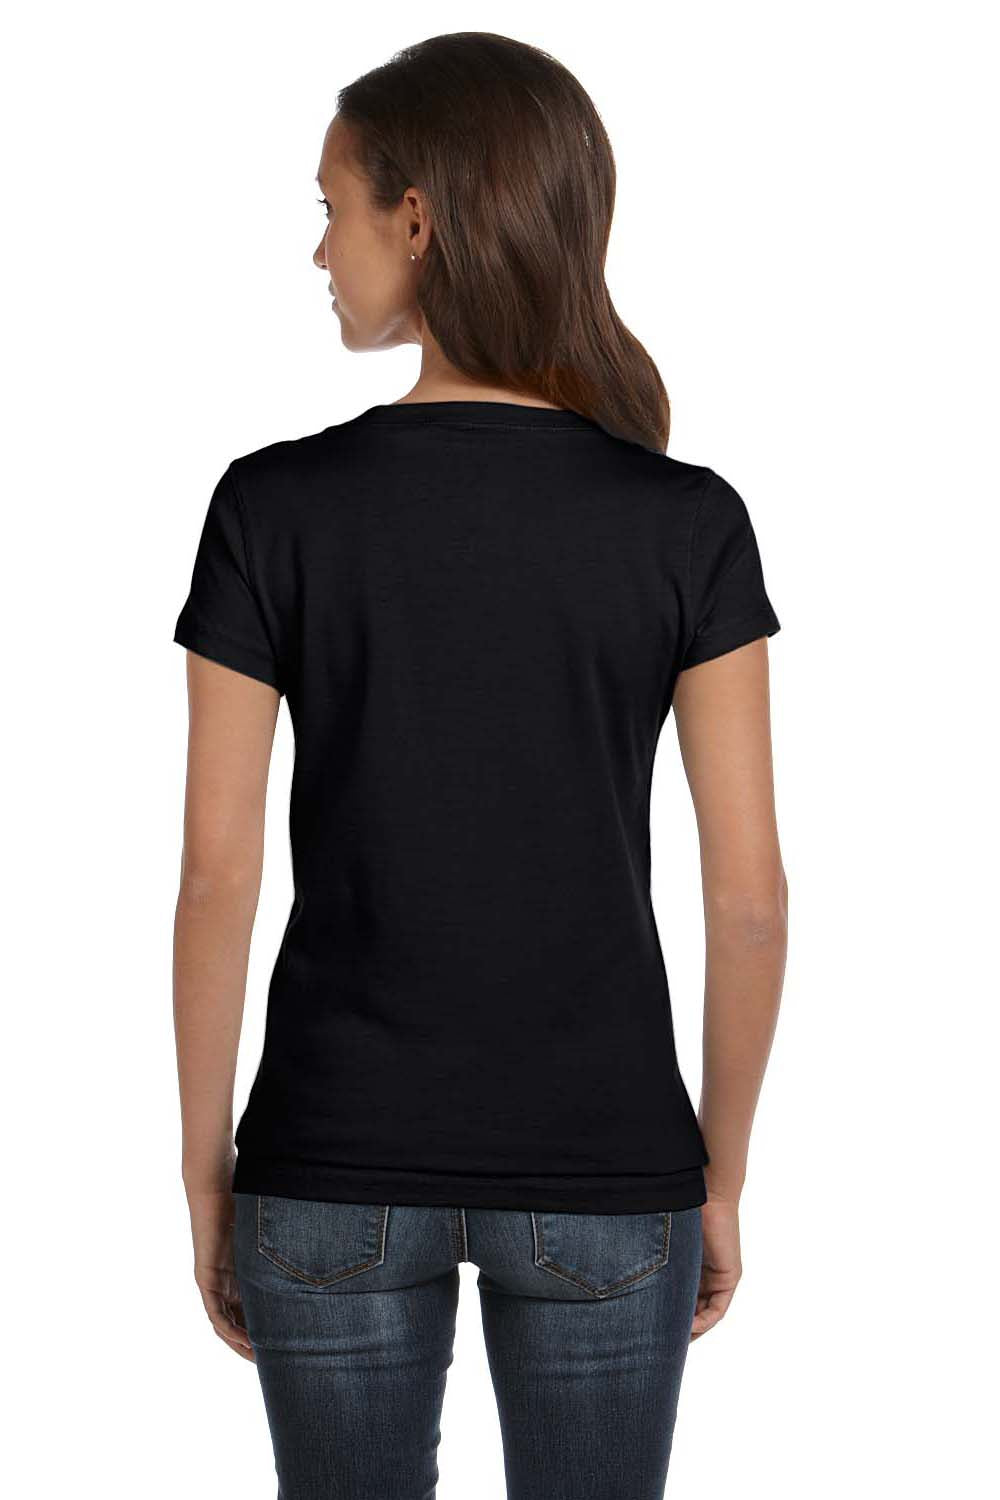 Bella + Canvas B6005/6005 Womens Jersey Short Sleeve V-Neck T-Shirt Black Model Back